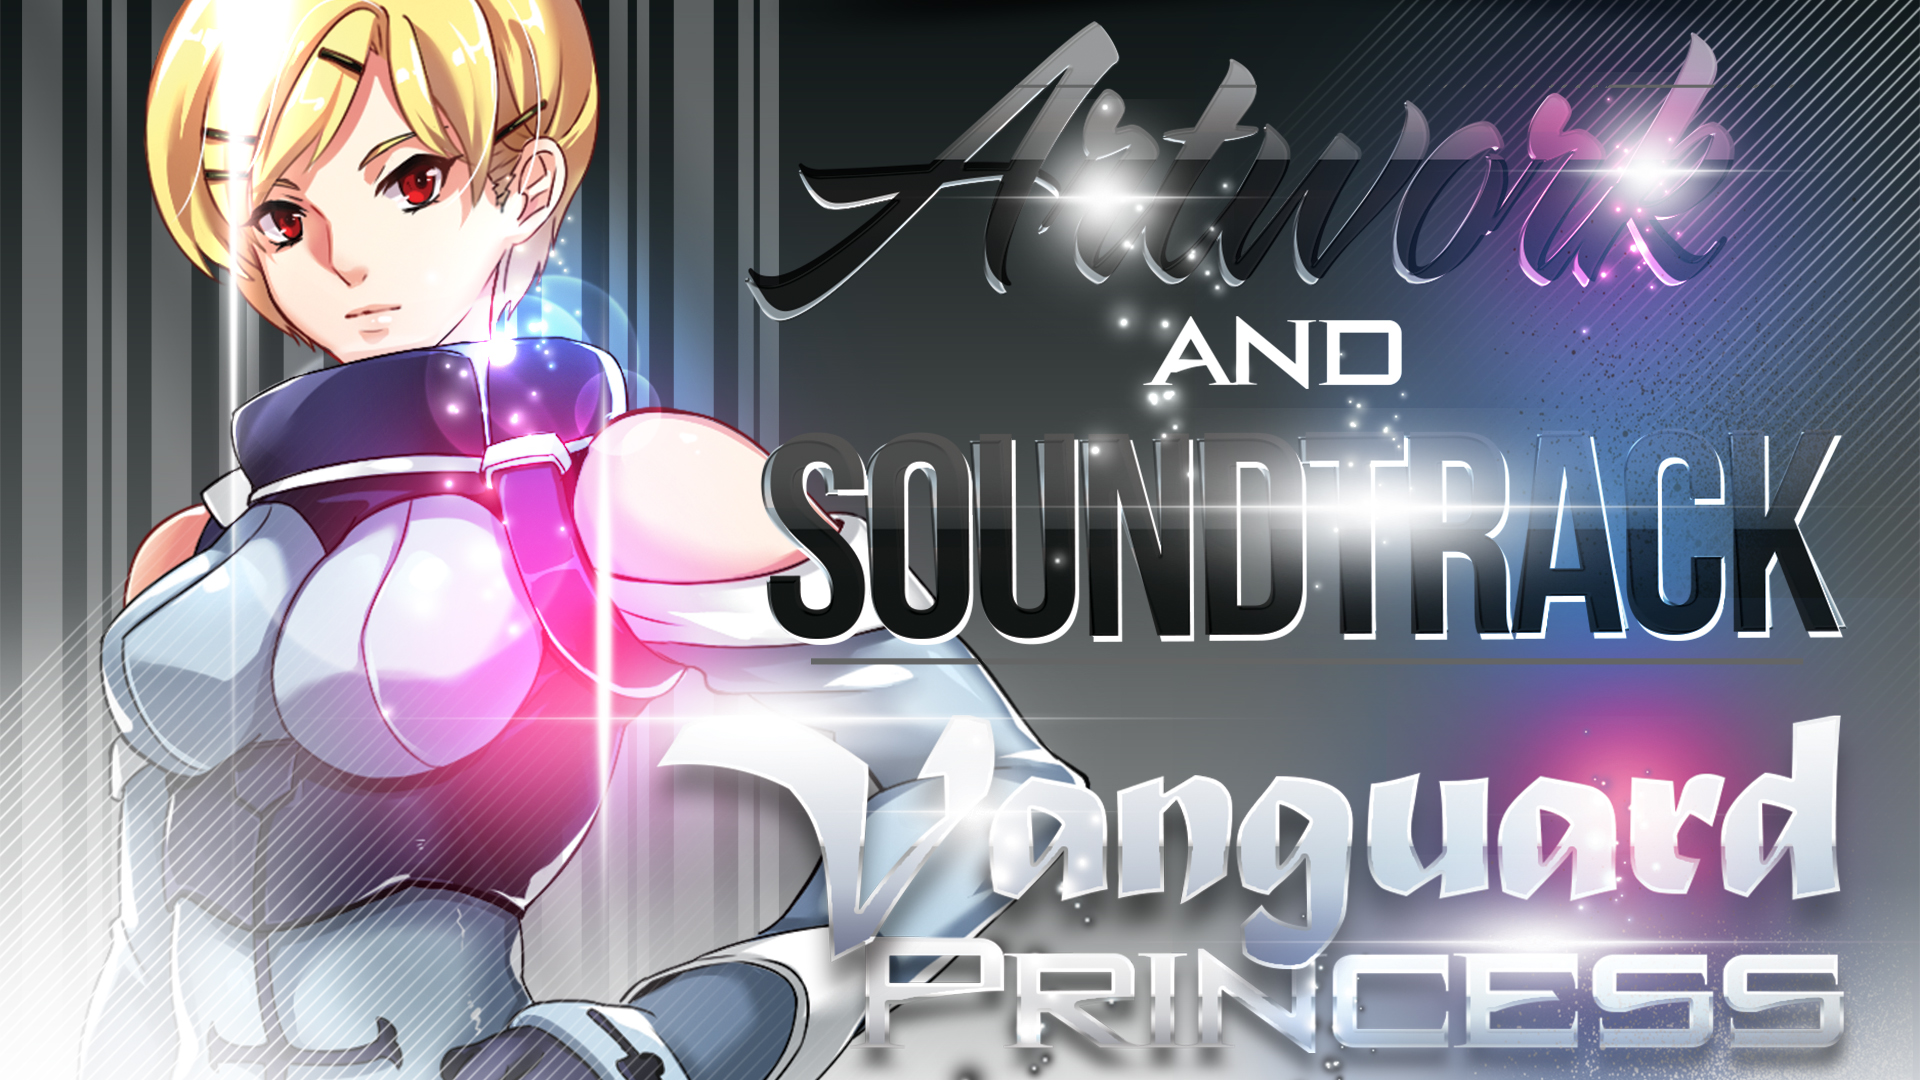 [$ 1.41] Vanguard Princess - Artwork and Soundtrack DLC Steam CD Key